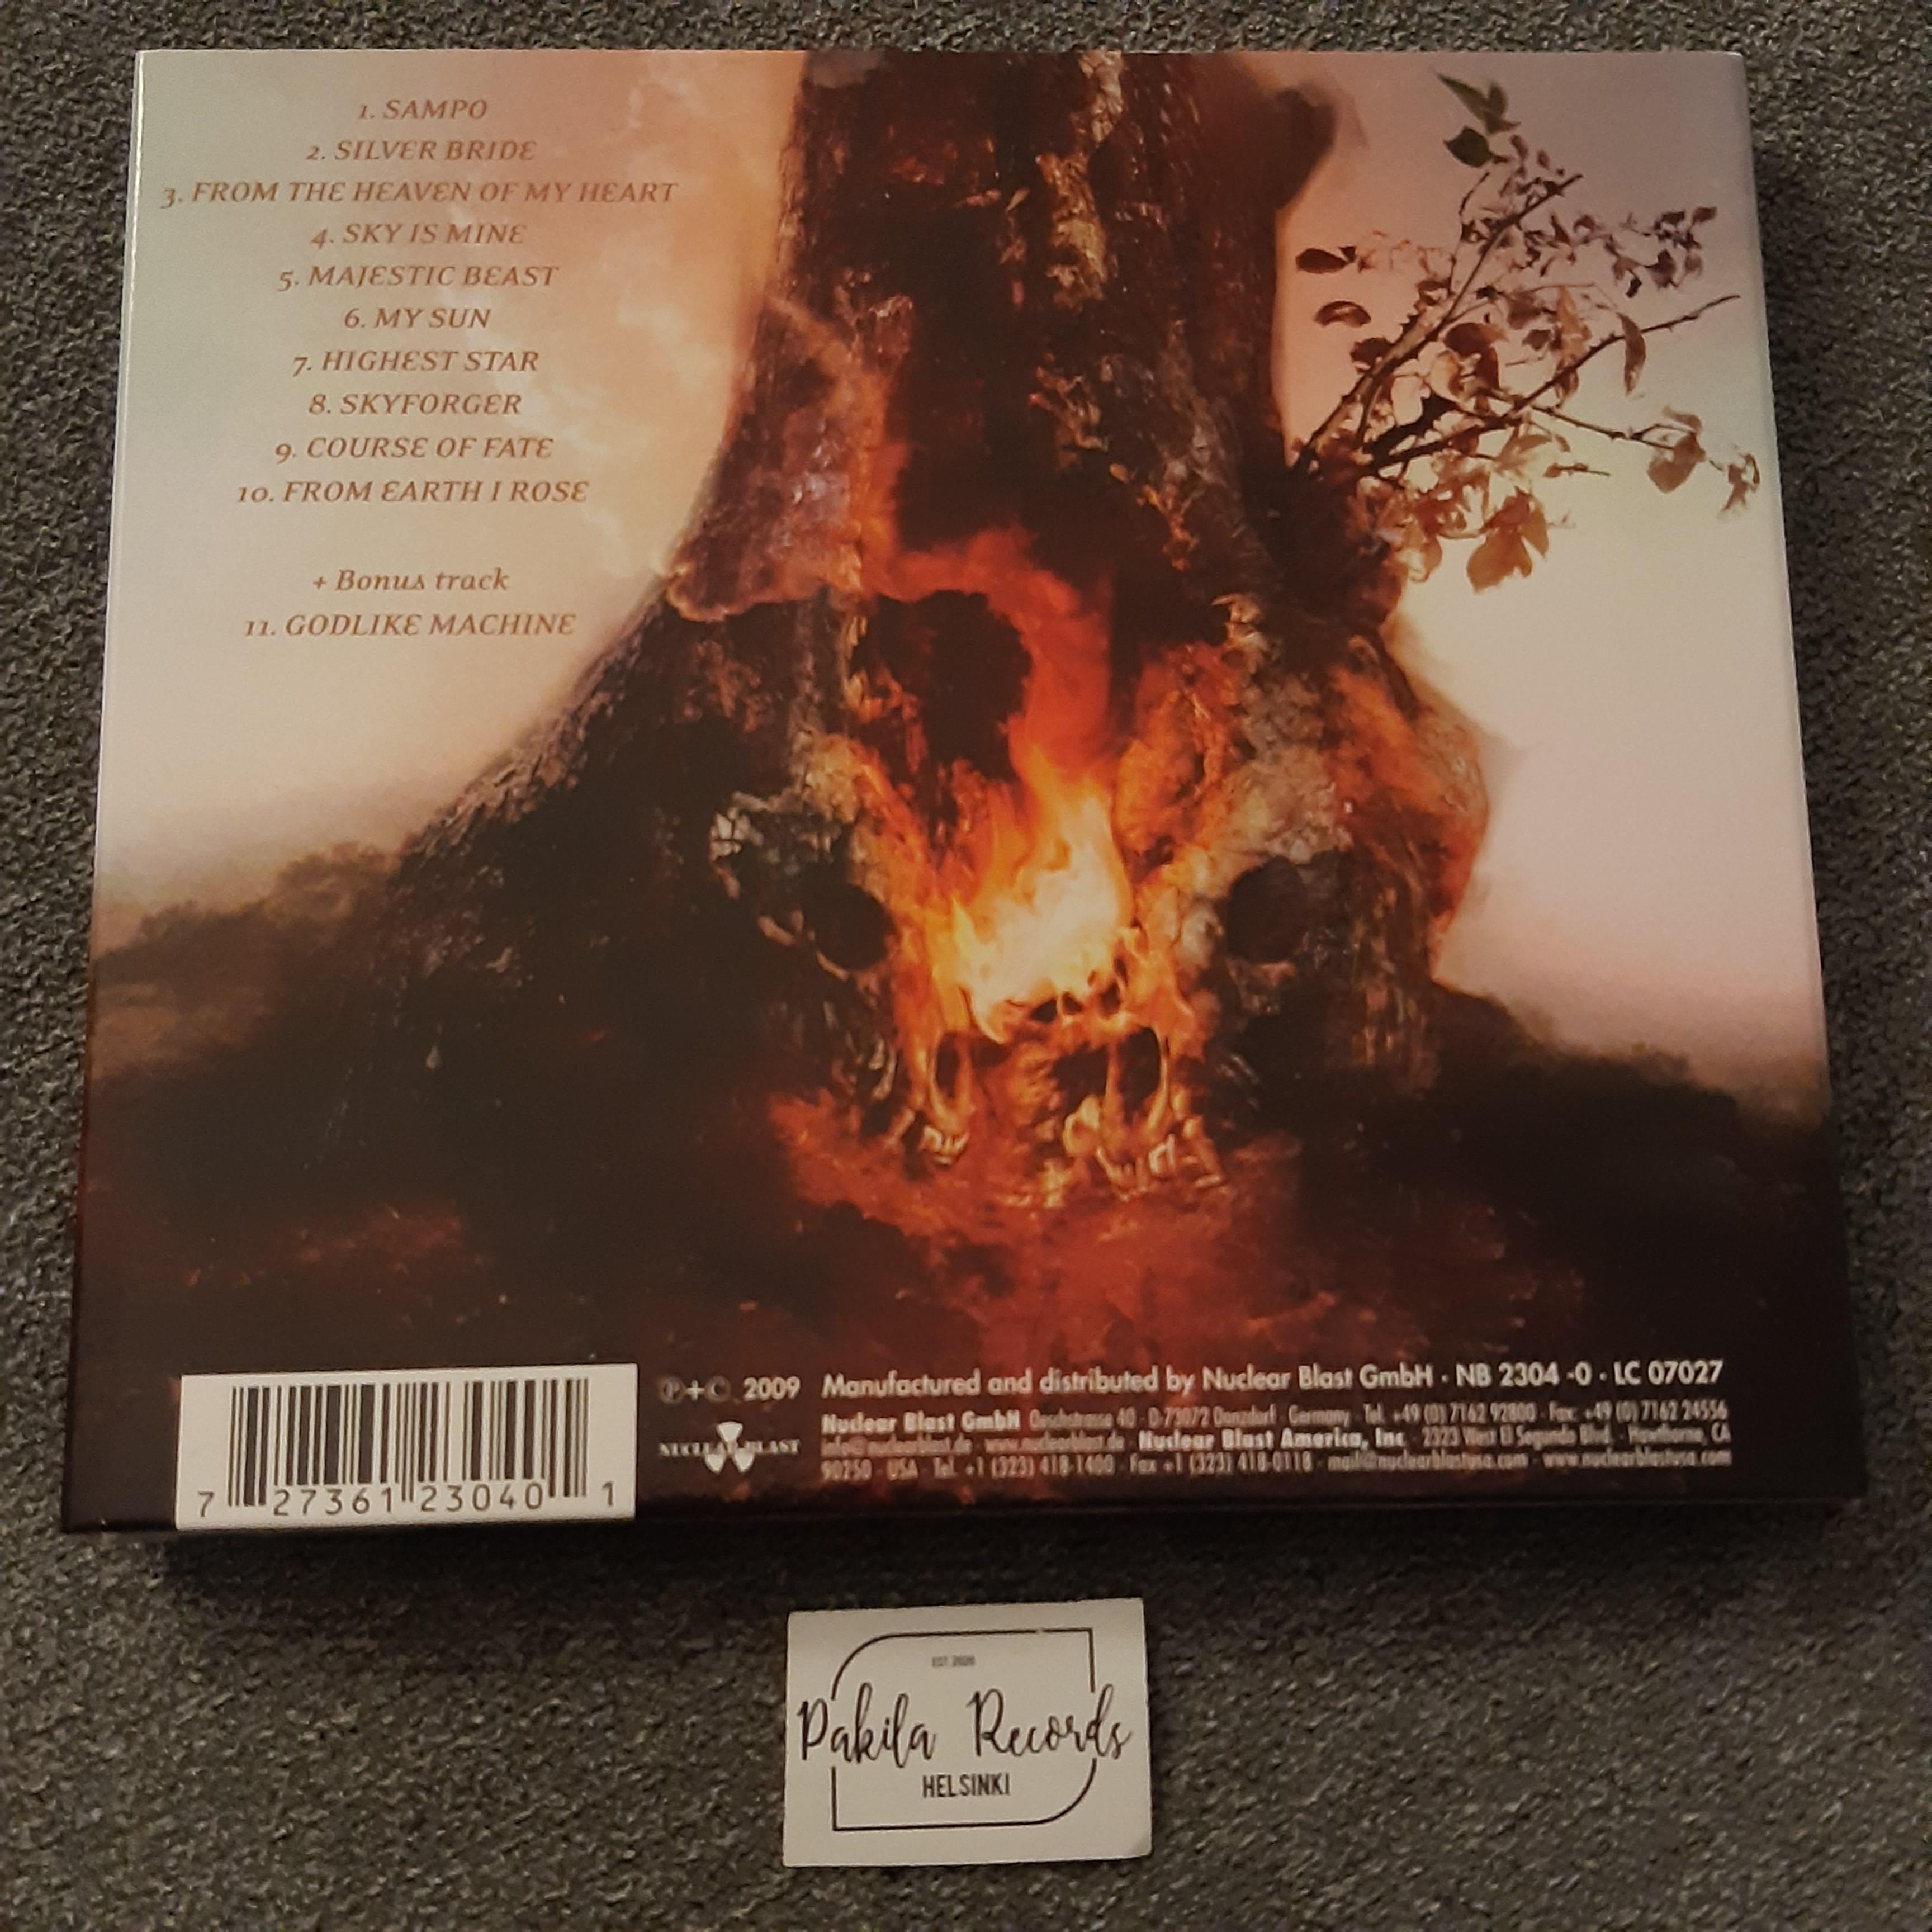 Amorphis - Skyforger - CD (käytetty)